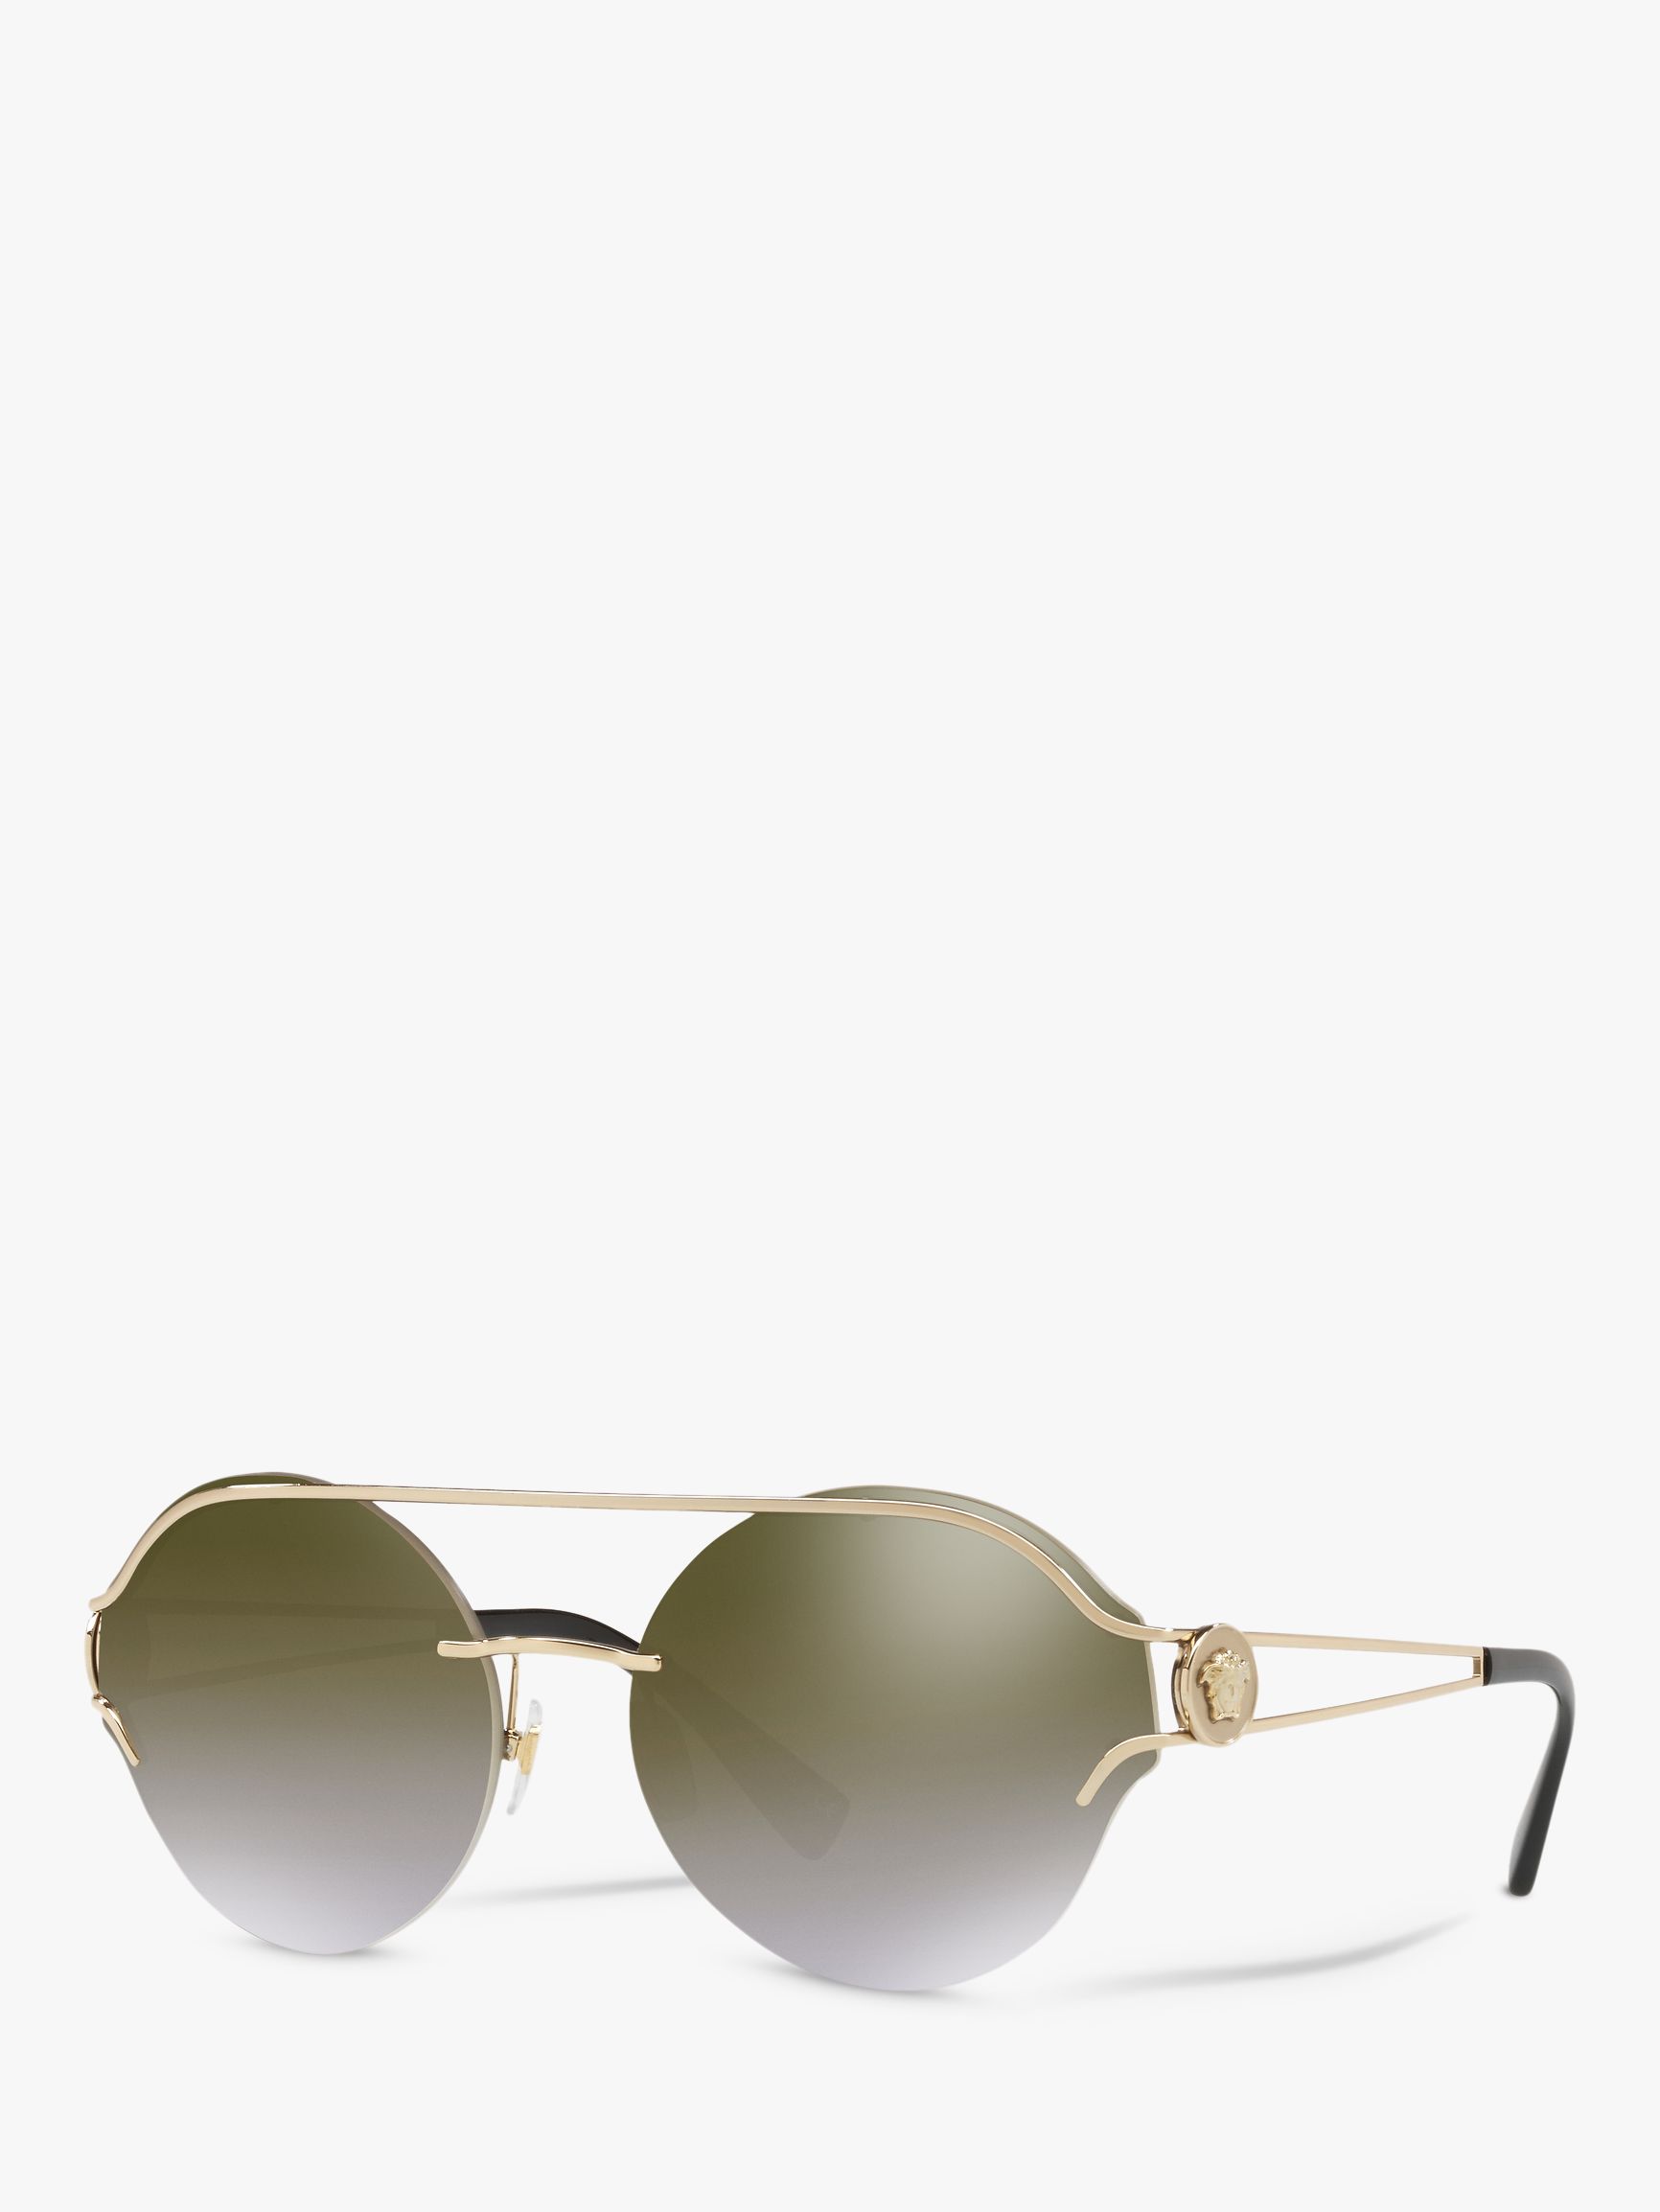 versace gold mirror sunglasses